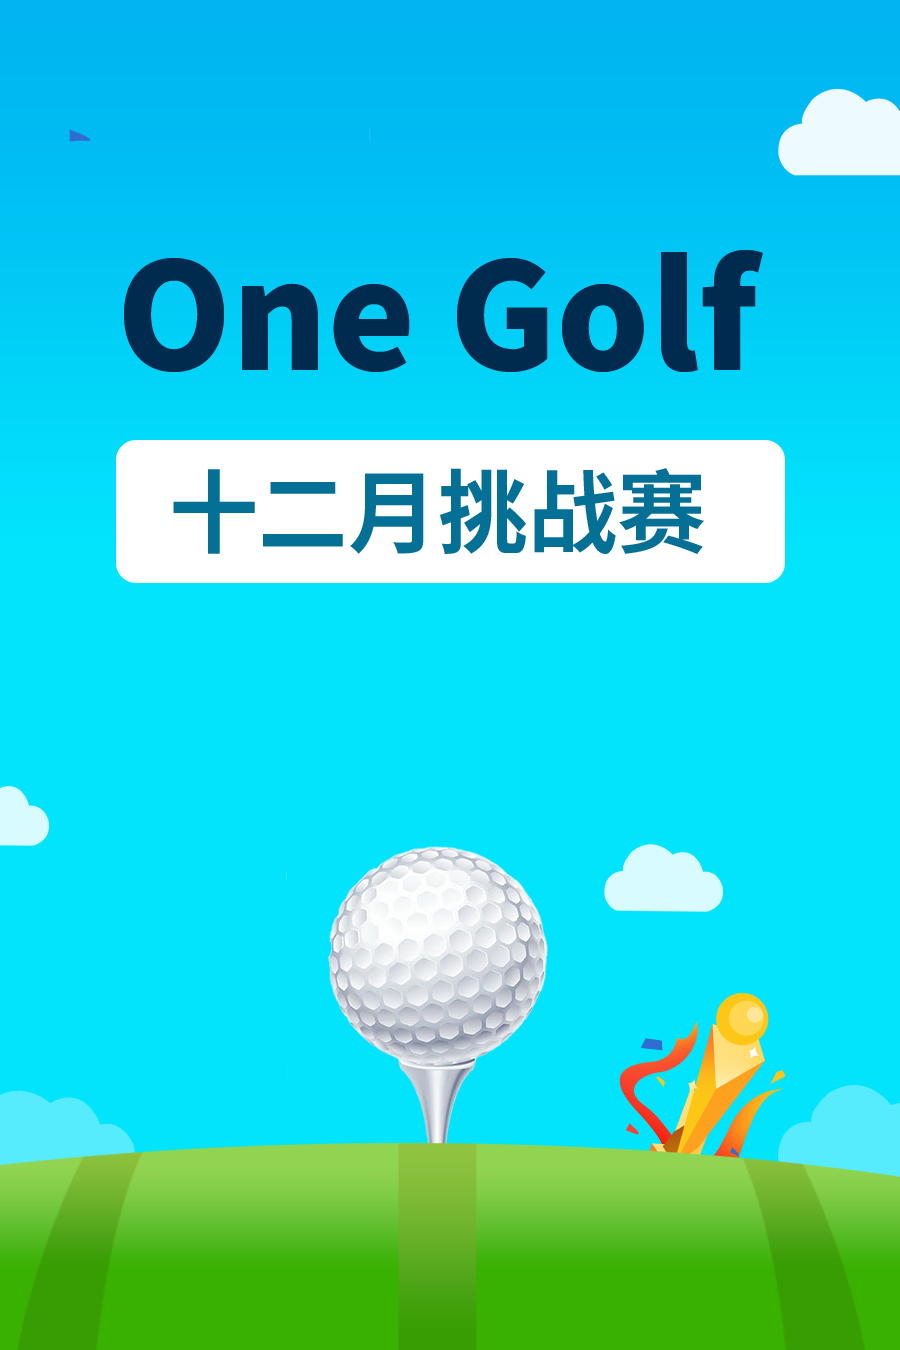 One Golf十二月挑战赛